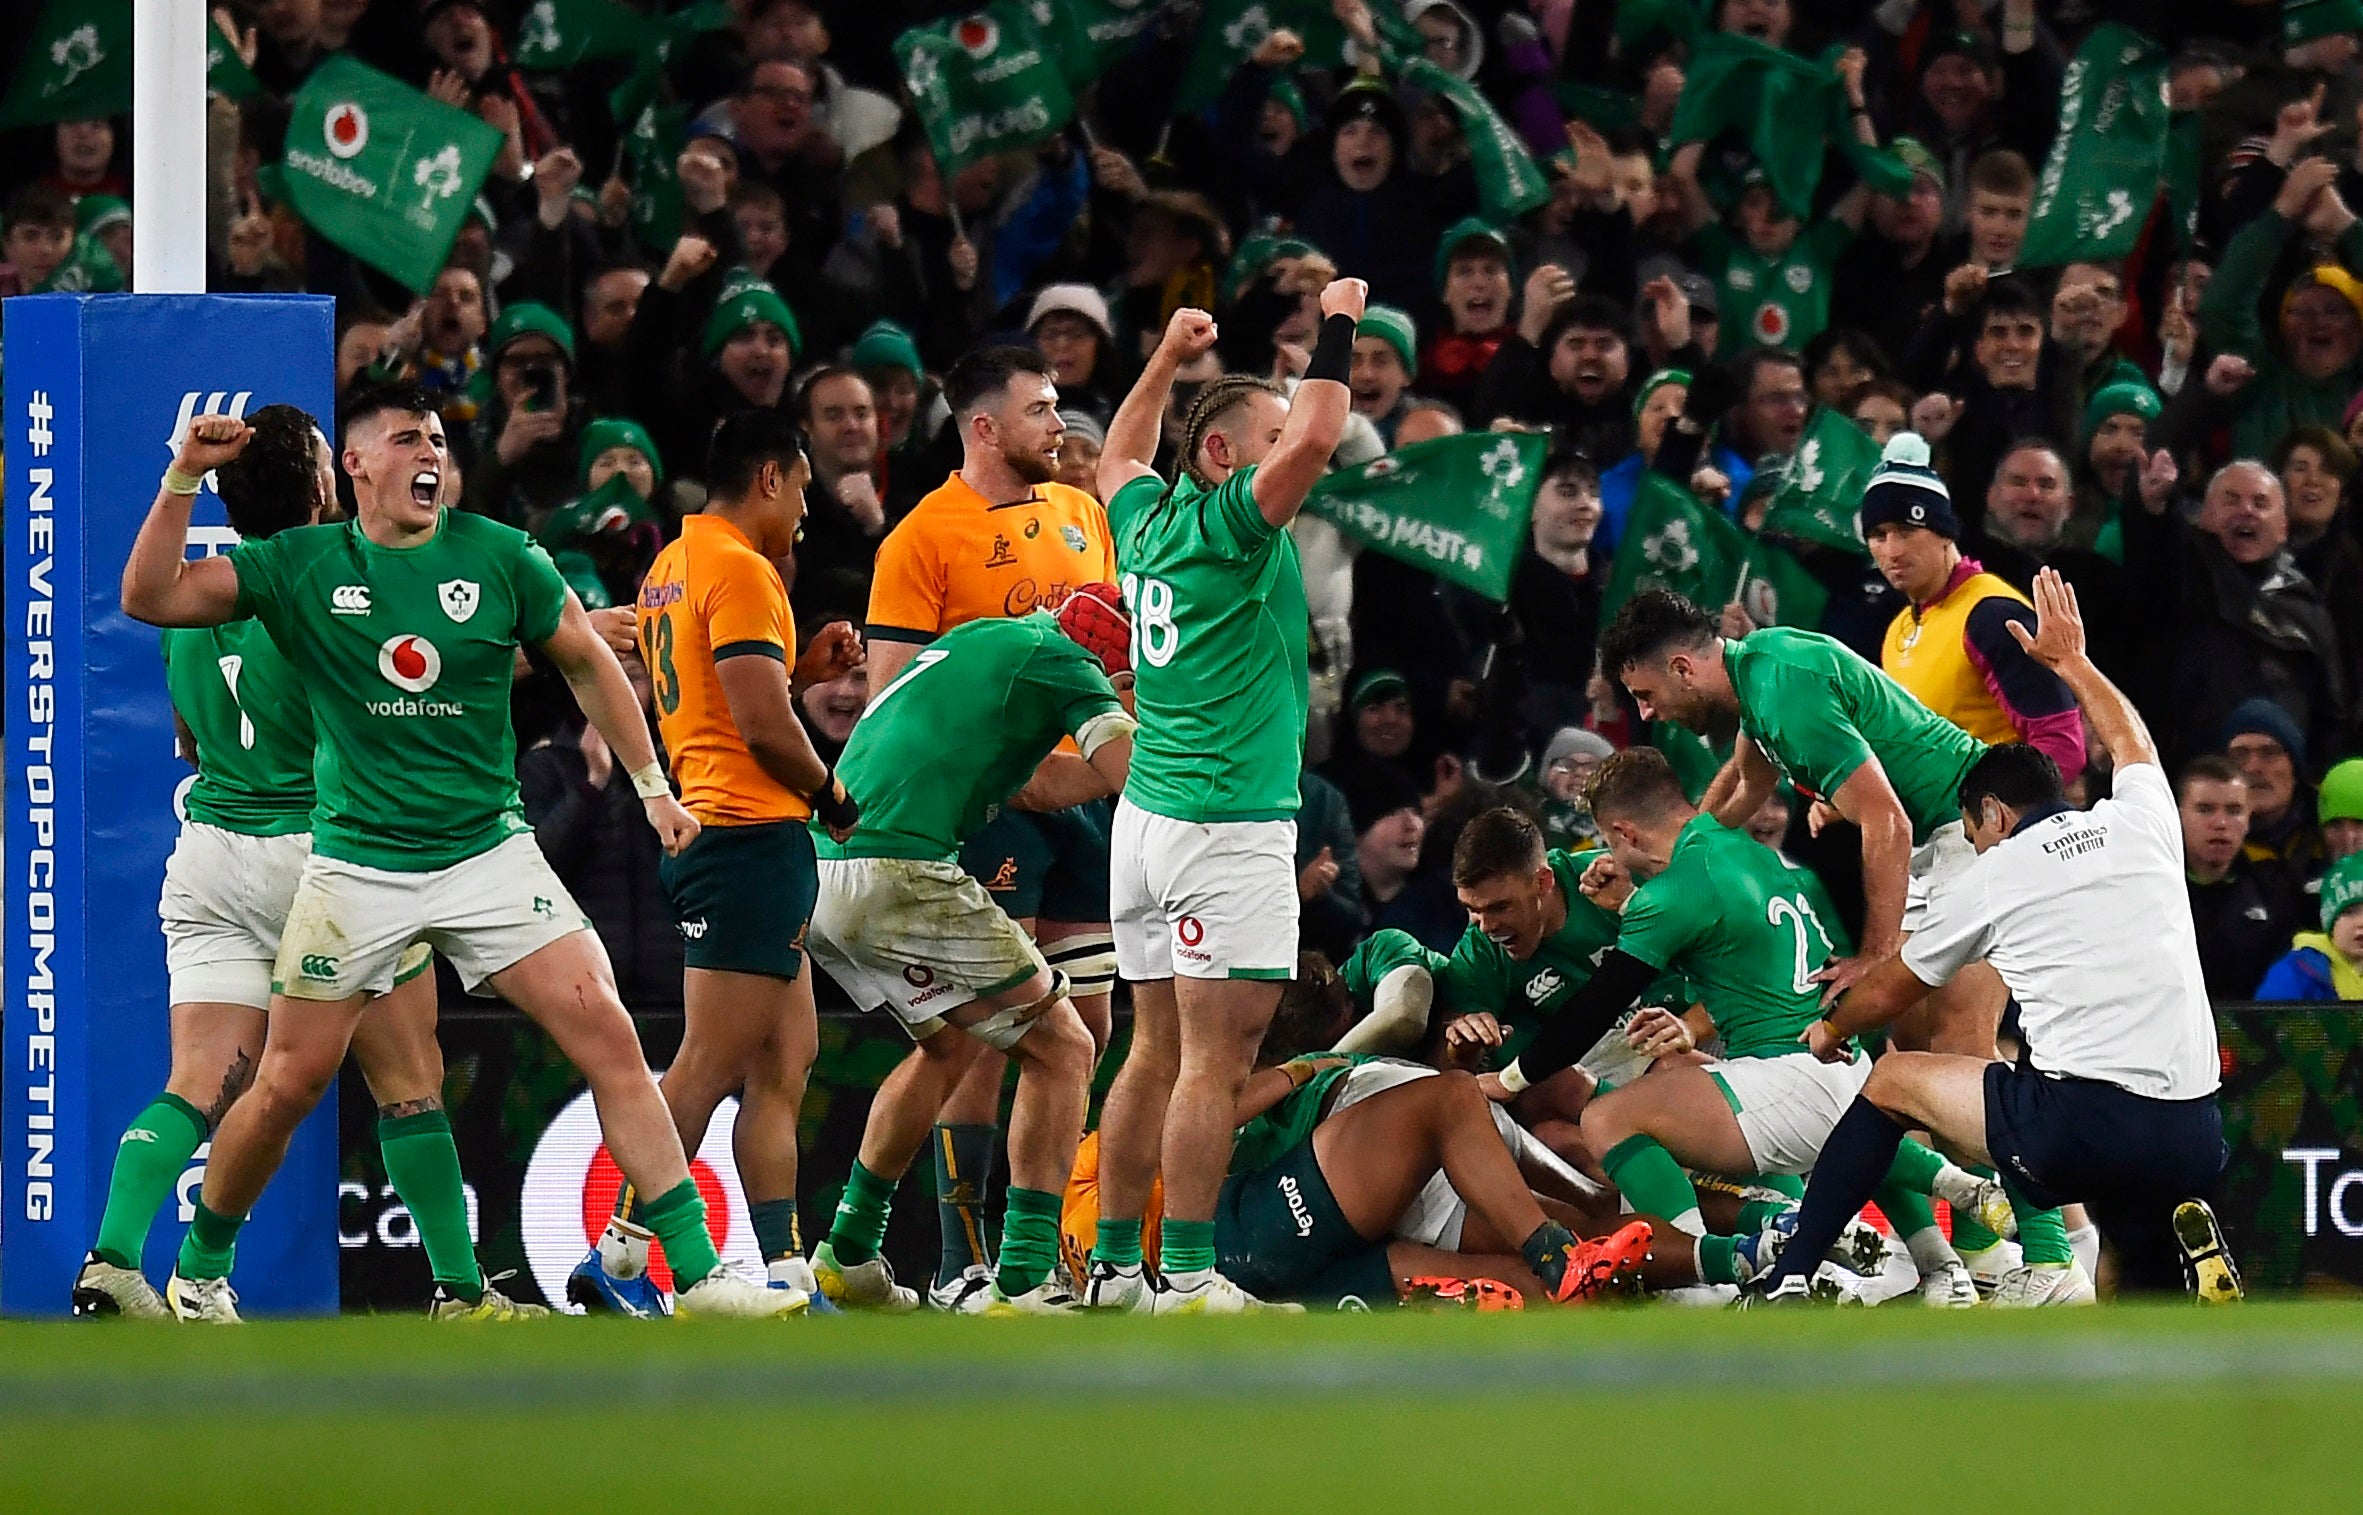 Ireland celebrated a hard-fought win over Australia